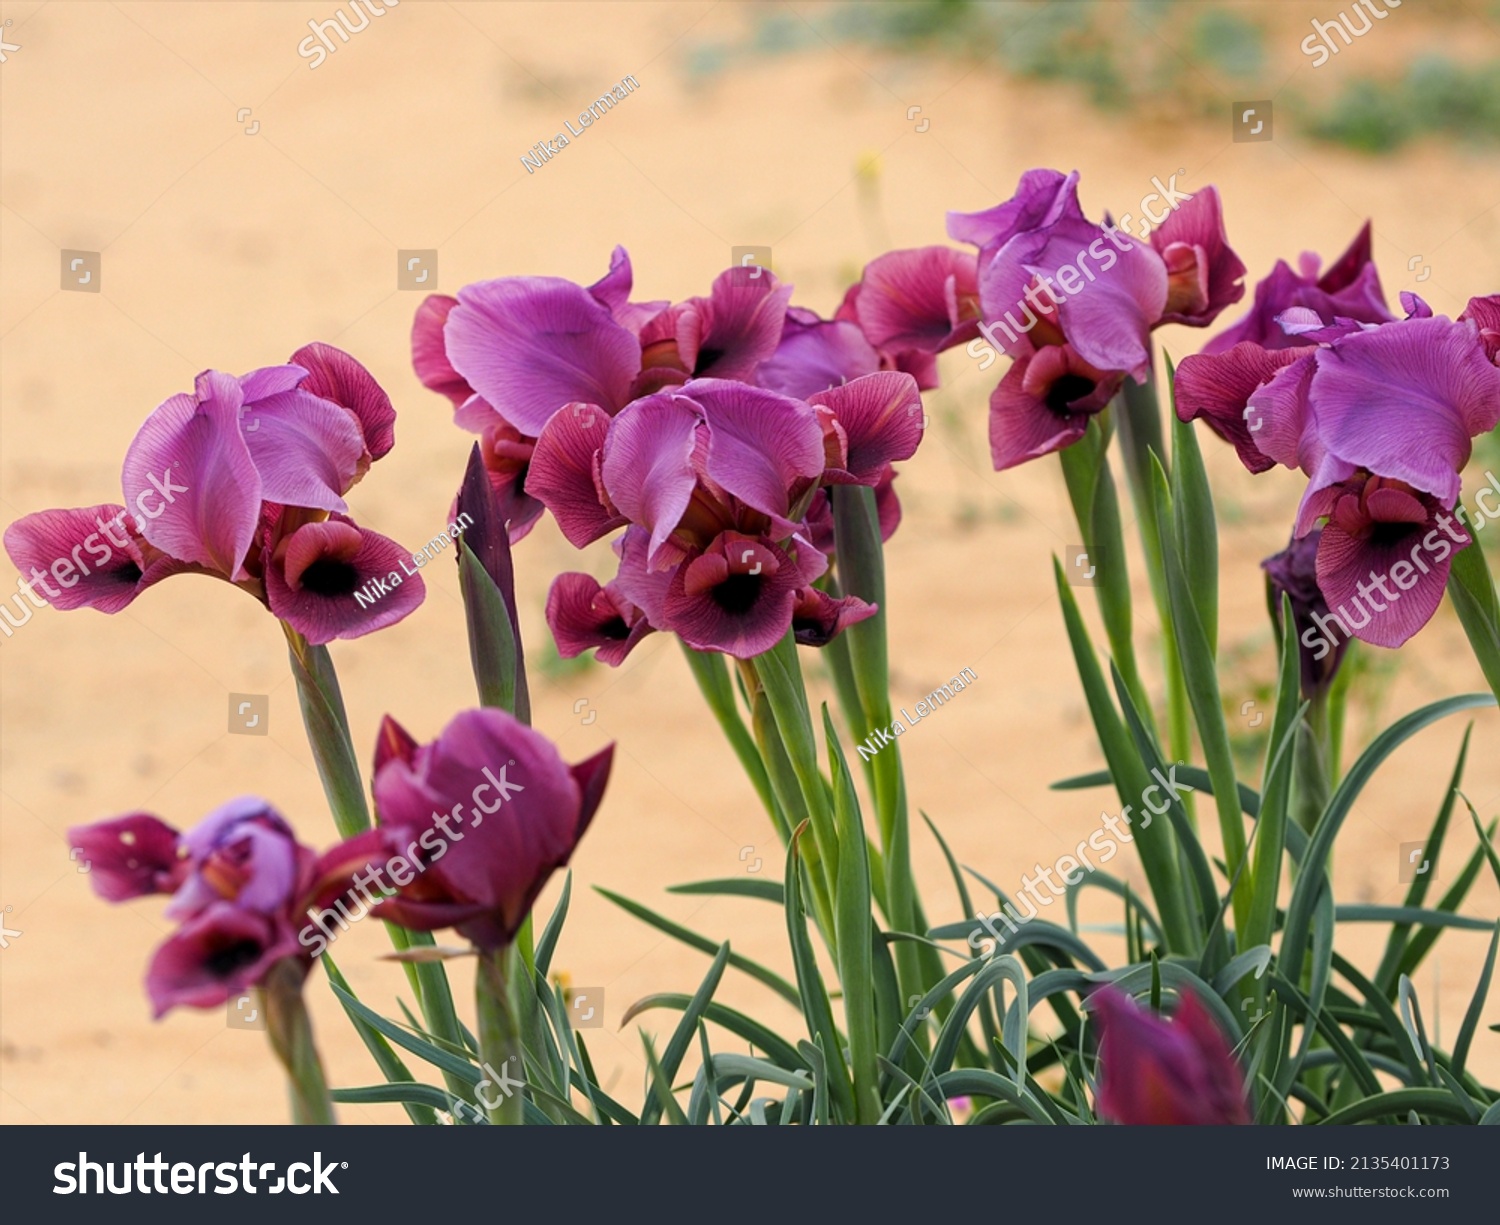 Wild irises bloom in the desert. Blurred background. #2135401173